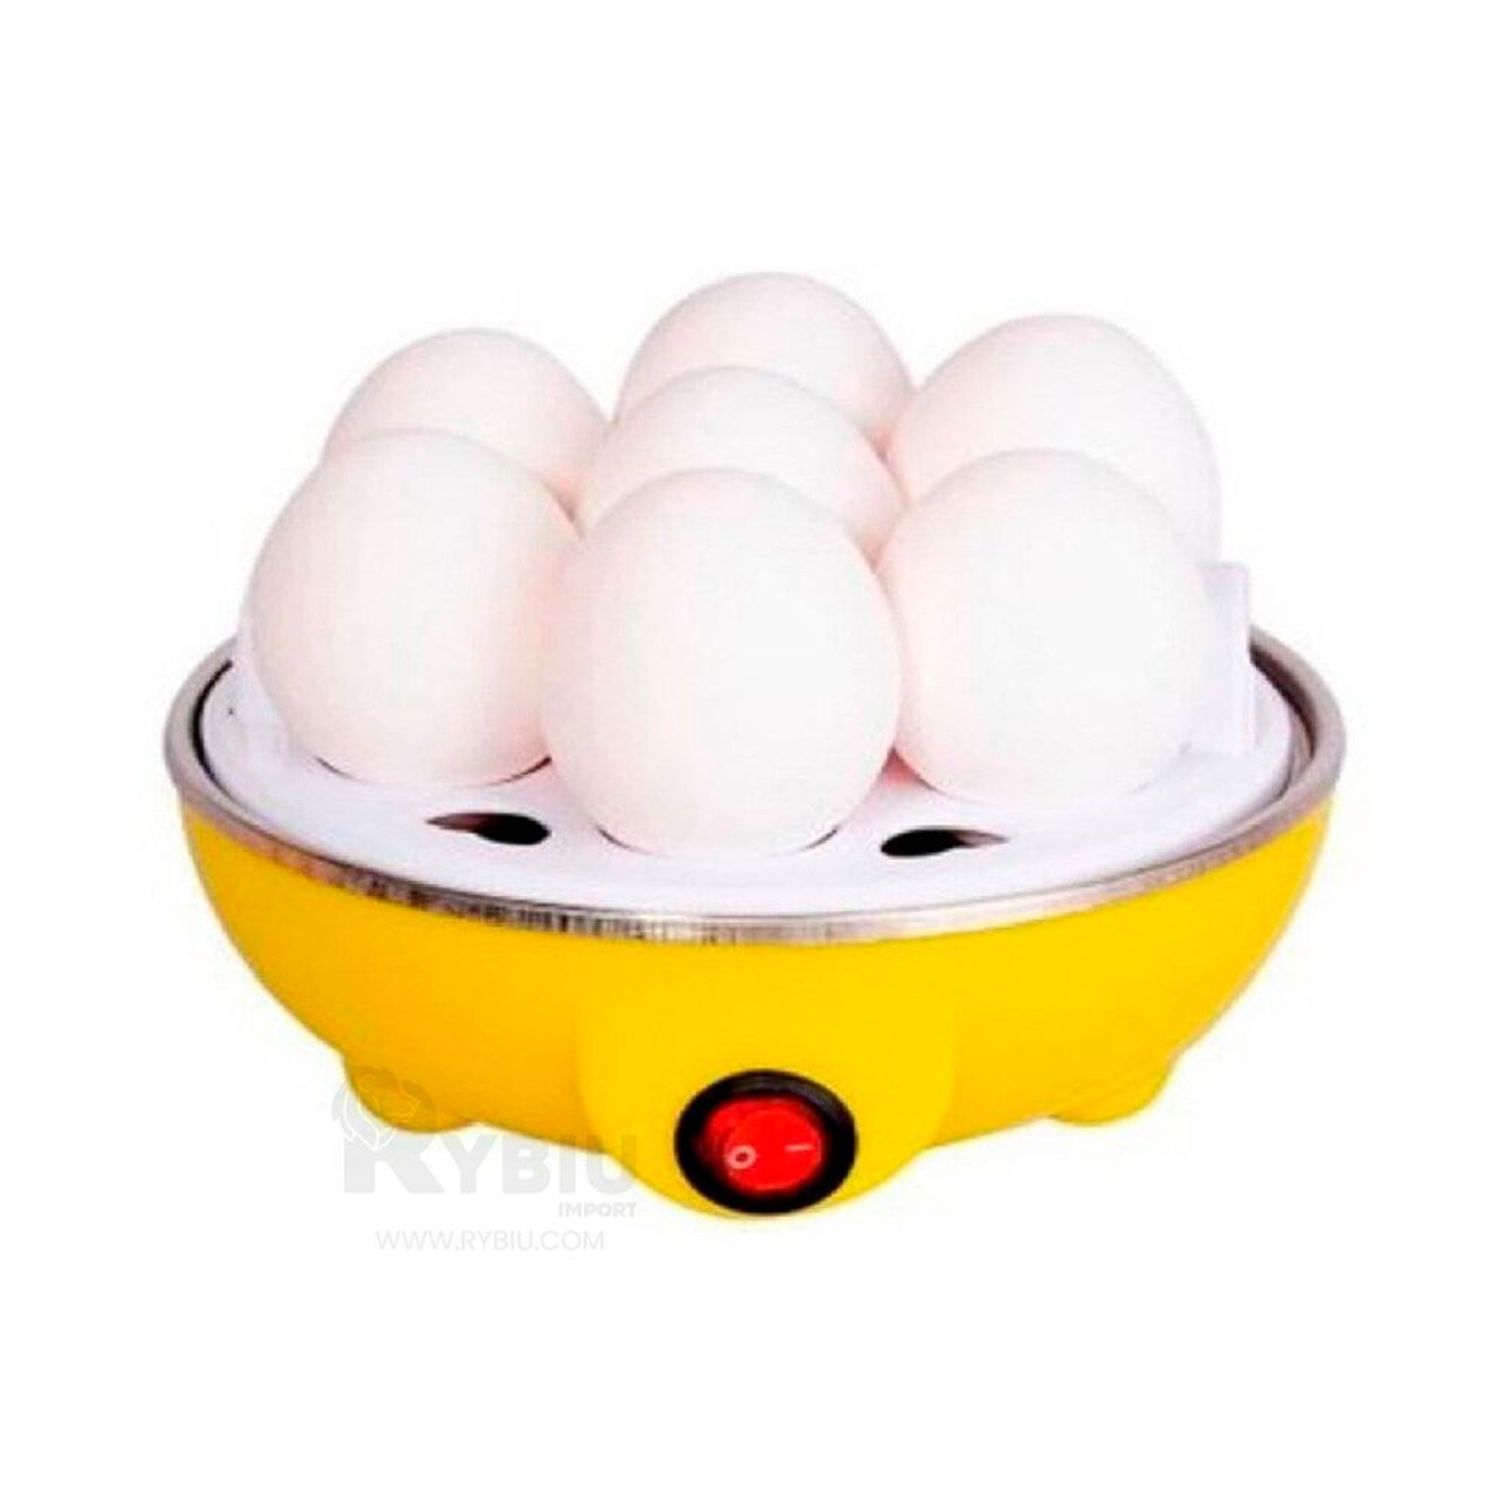 Electrico Hervidor Amarillo para Cocinar Huevos I Oechsle - Oechsle